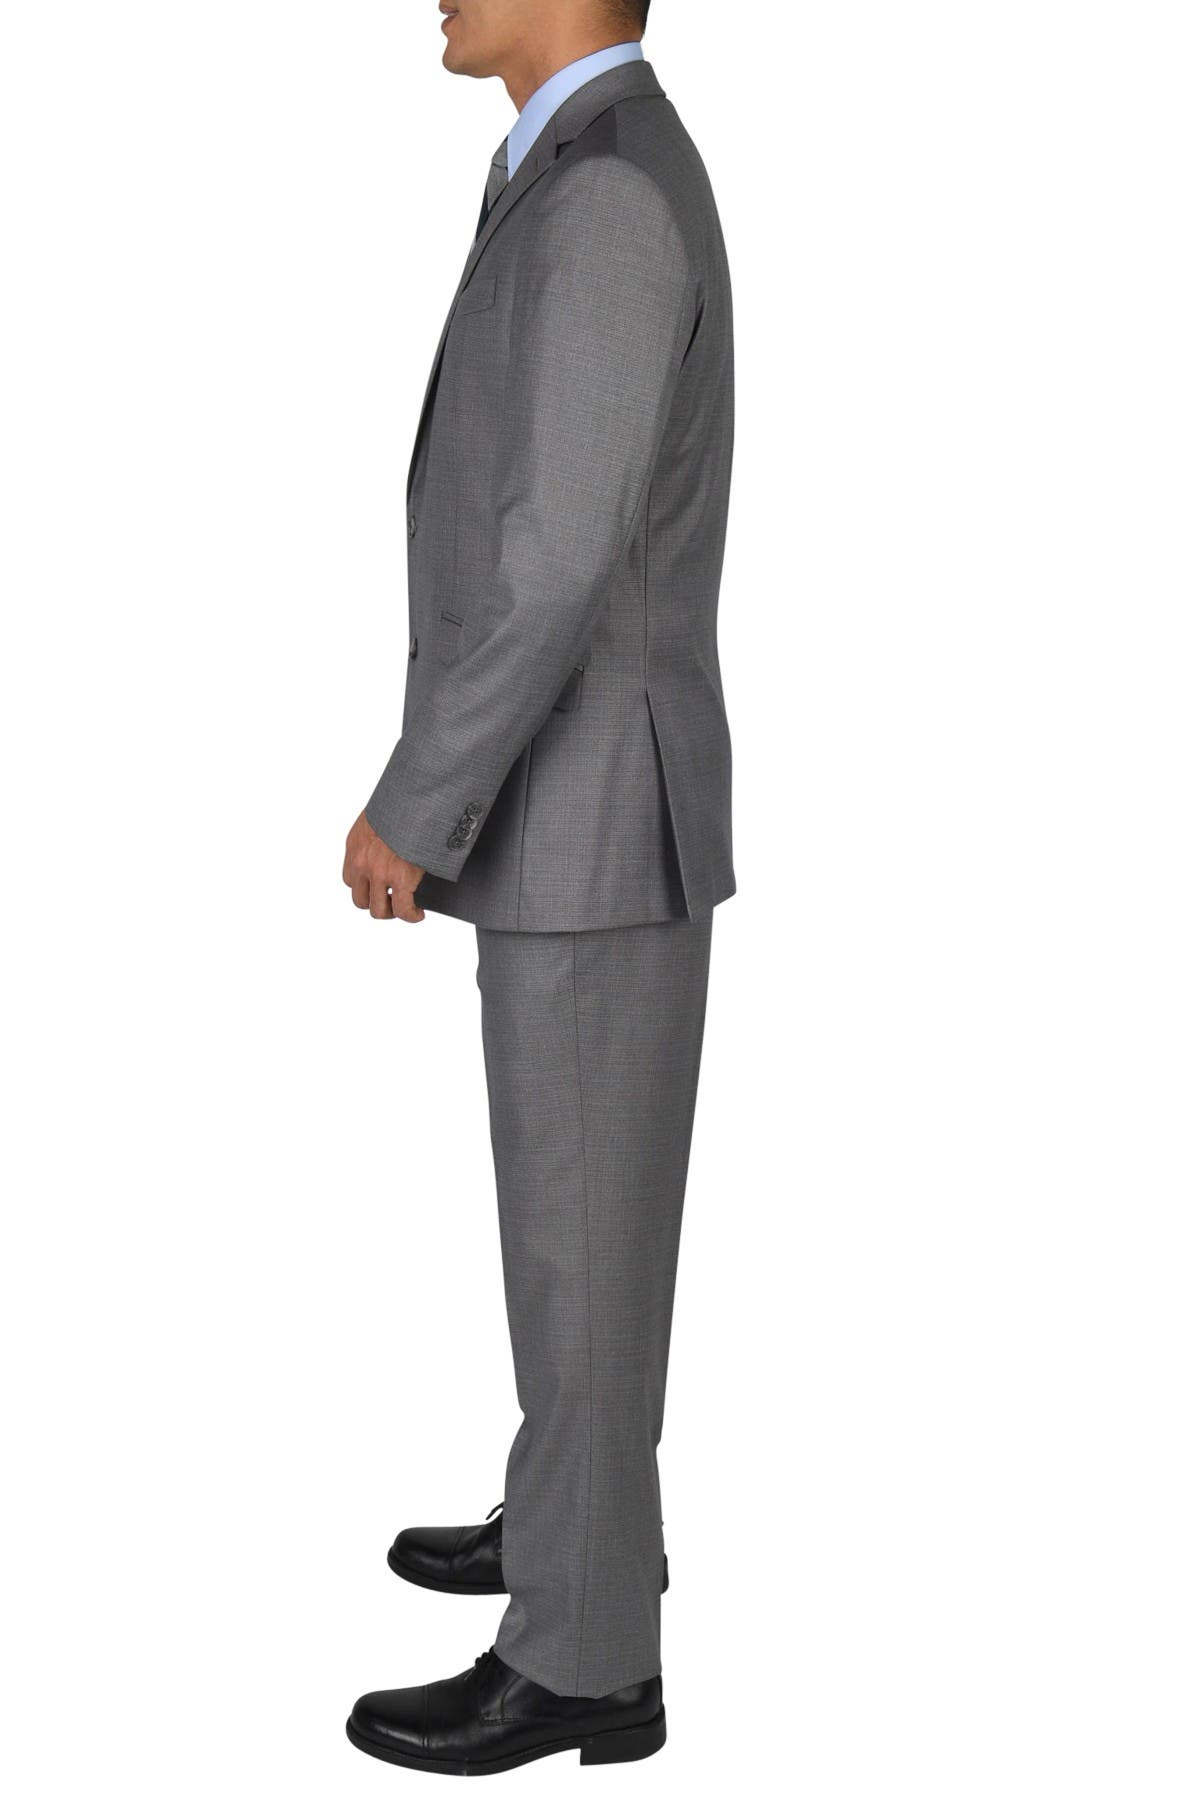 Kenneth Cole Reaction Basketweave Two Button Notch Lapel Techni-cole Performance Slim Fit Suit In Light/pastel Grey6